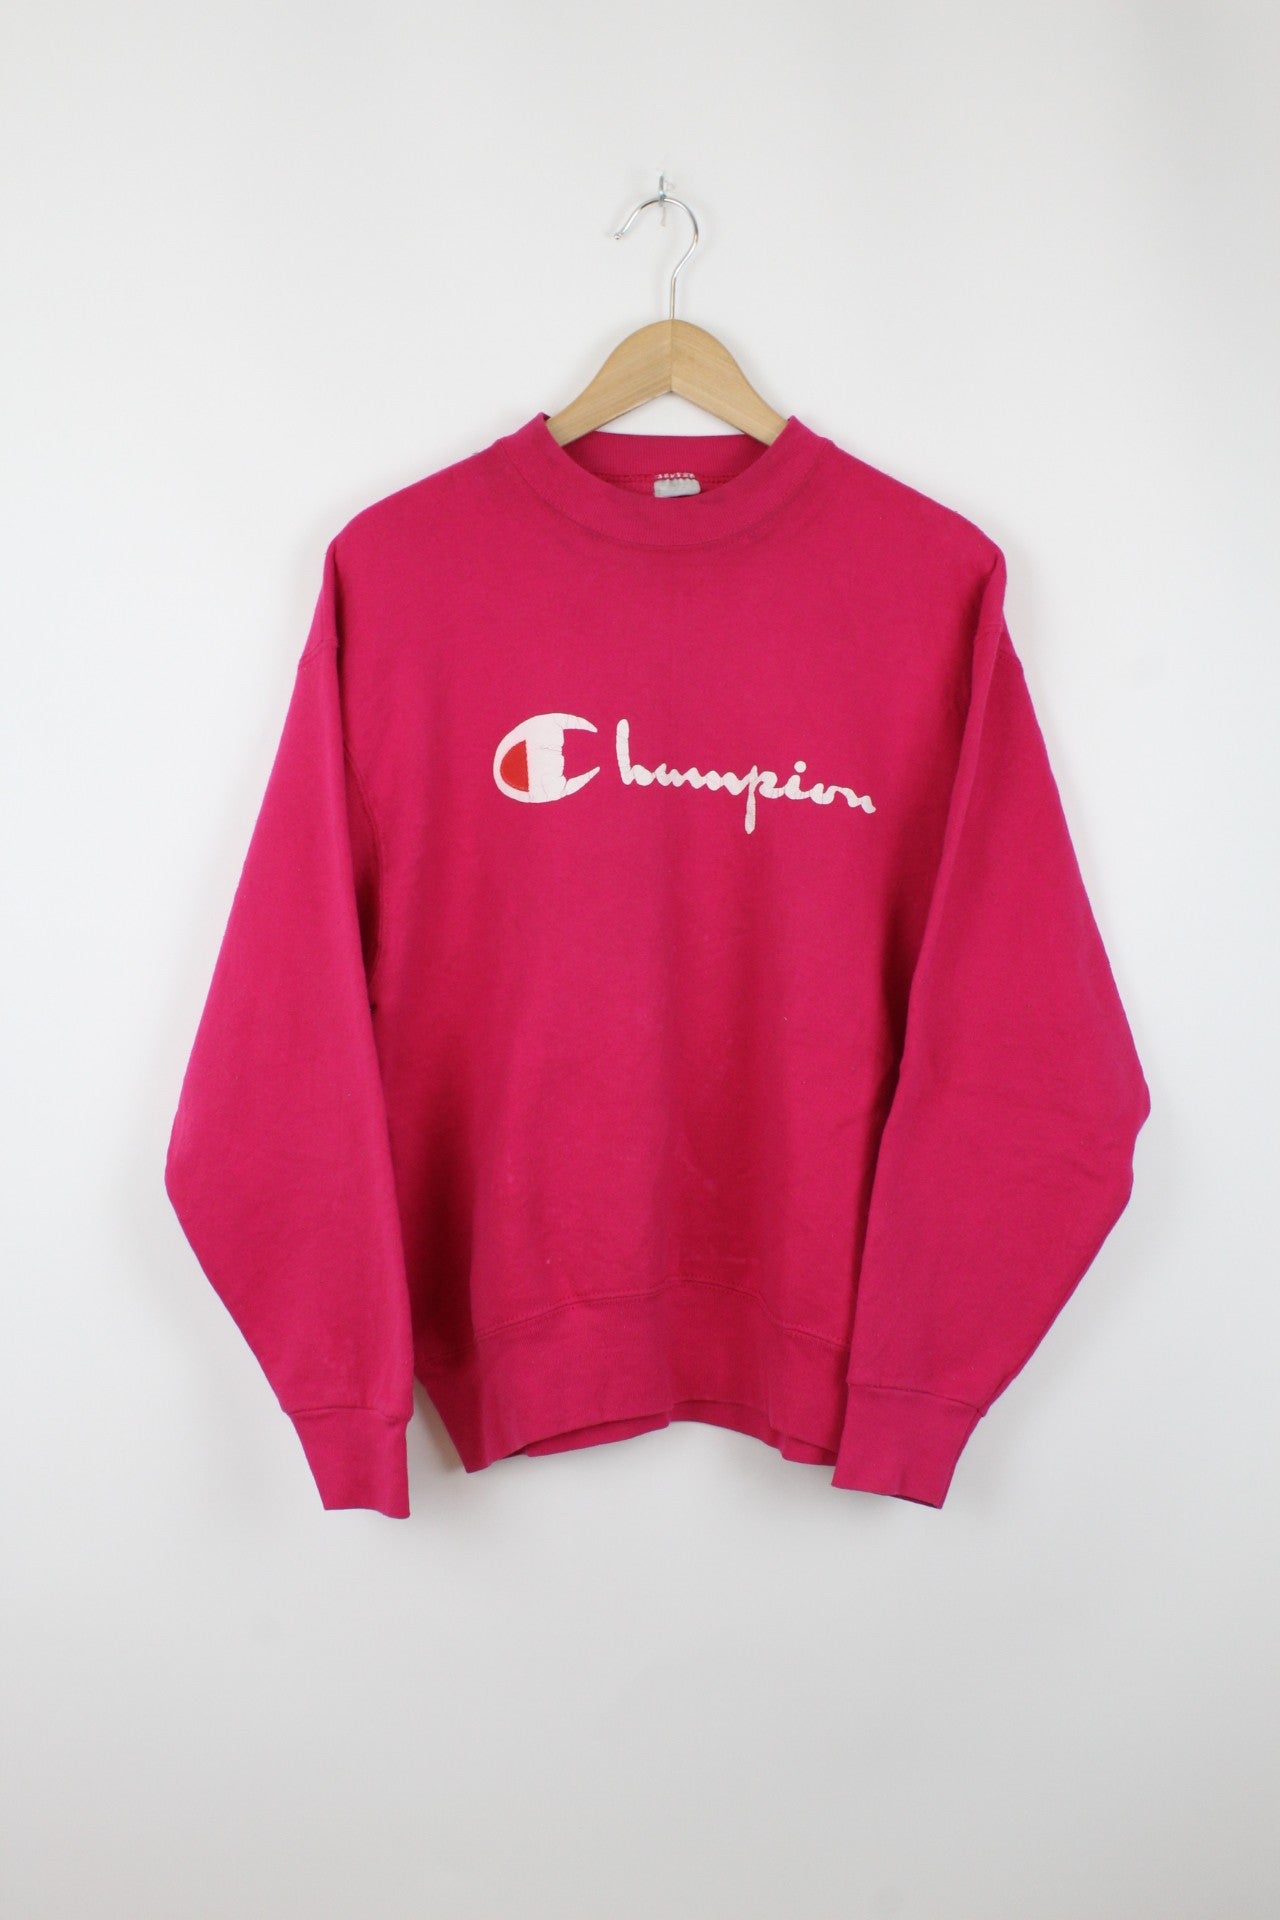 Vintage Champion Sweater - M